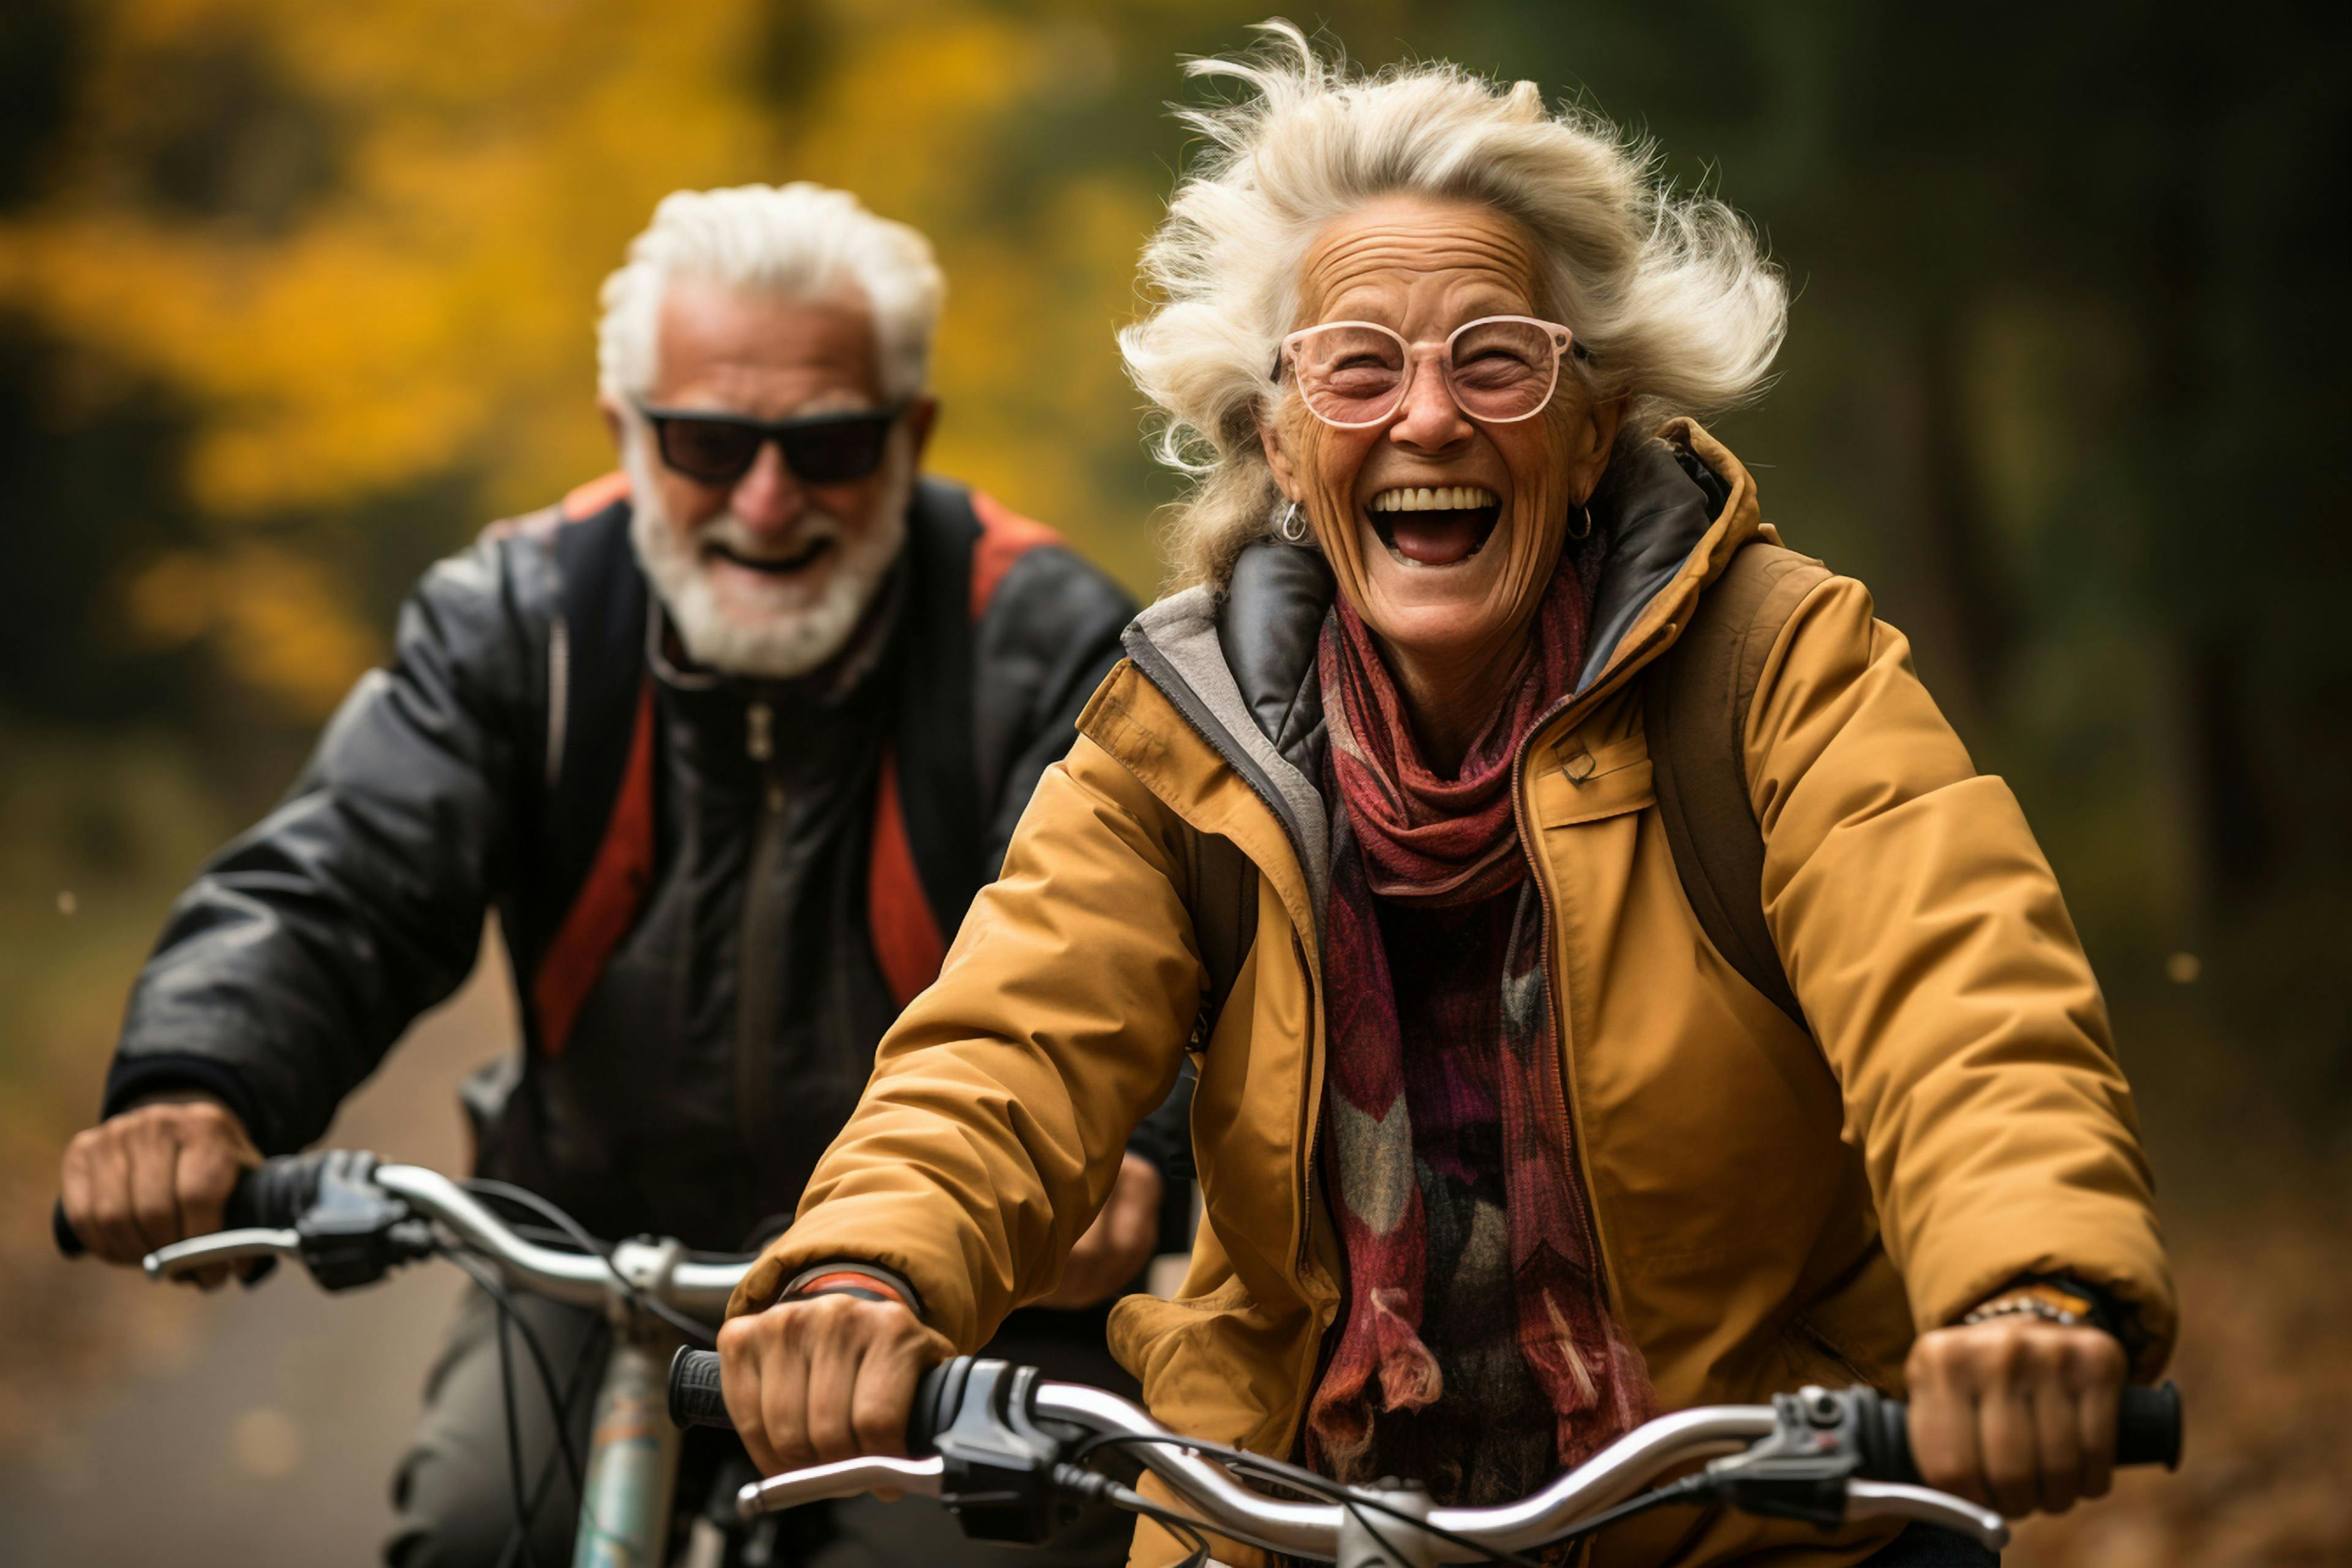 |Cheerful Active Senior Couple | Image credit: valeriia - stock.adobe.com